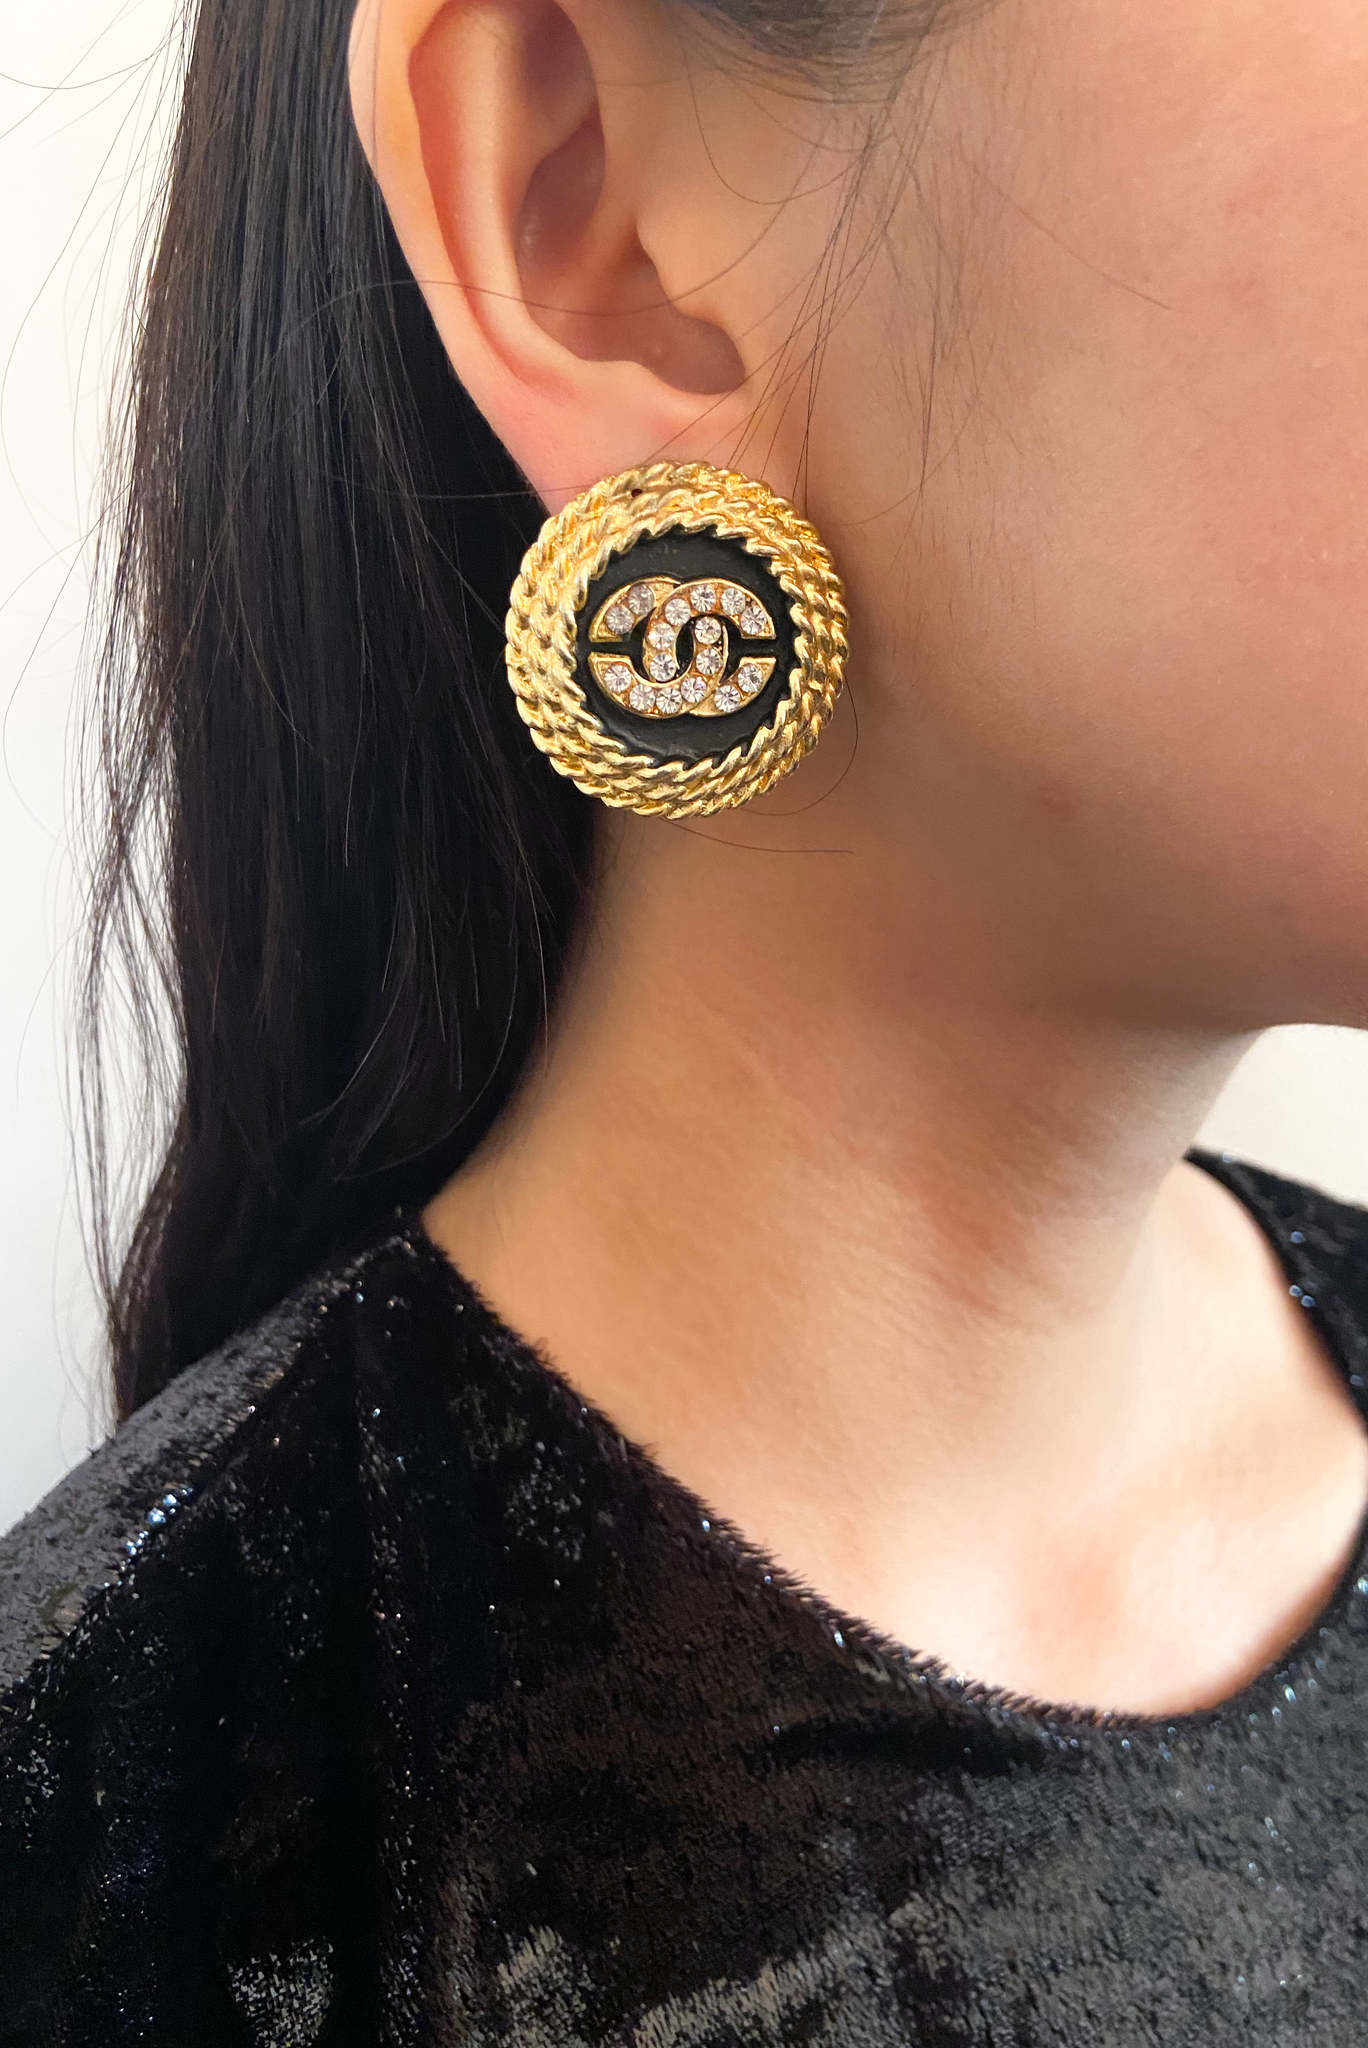 Earring Chanel Button Jewelry 